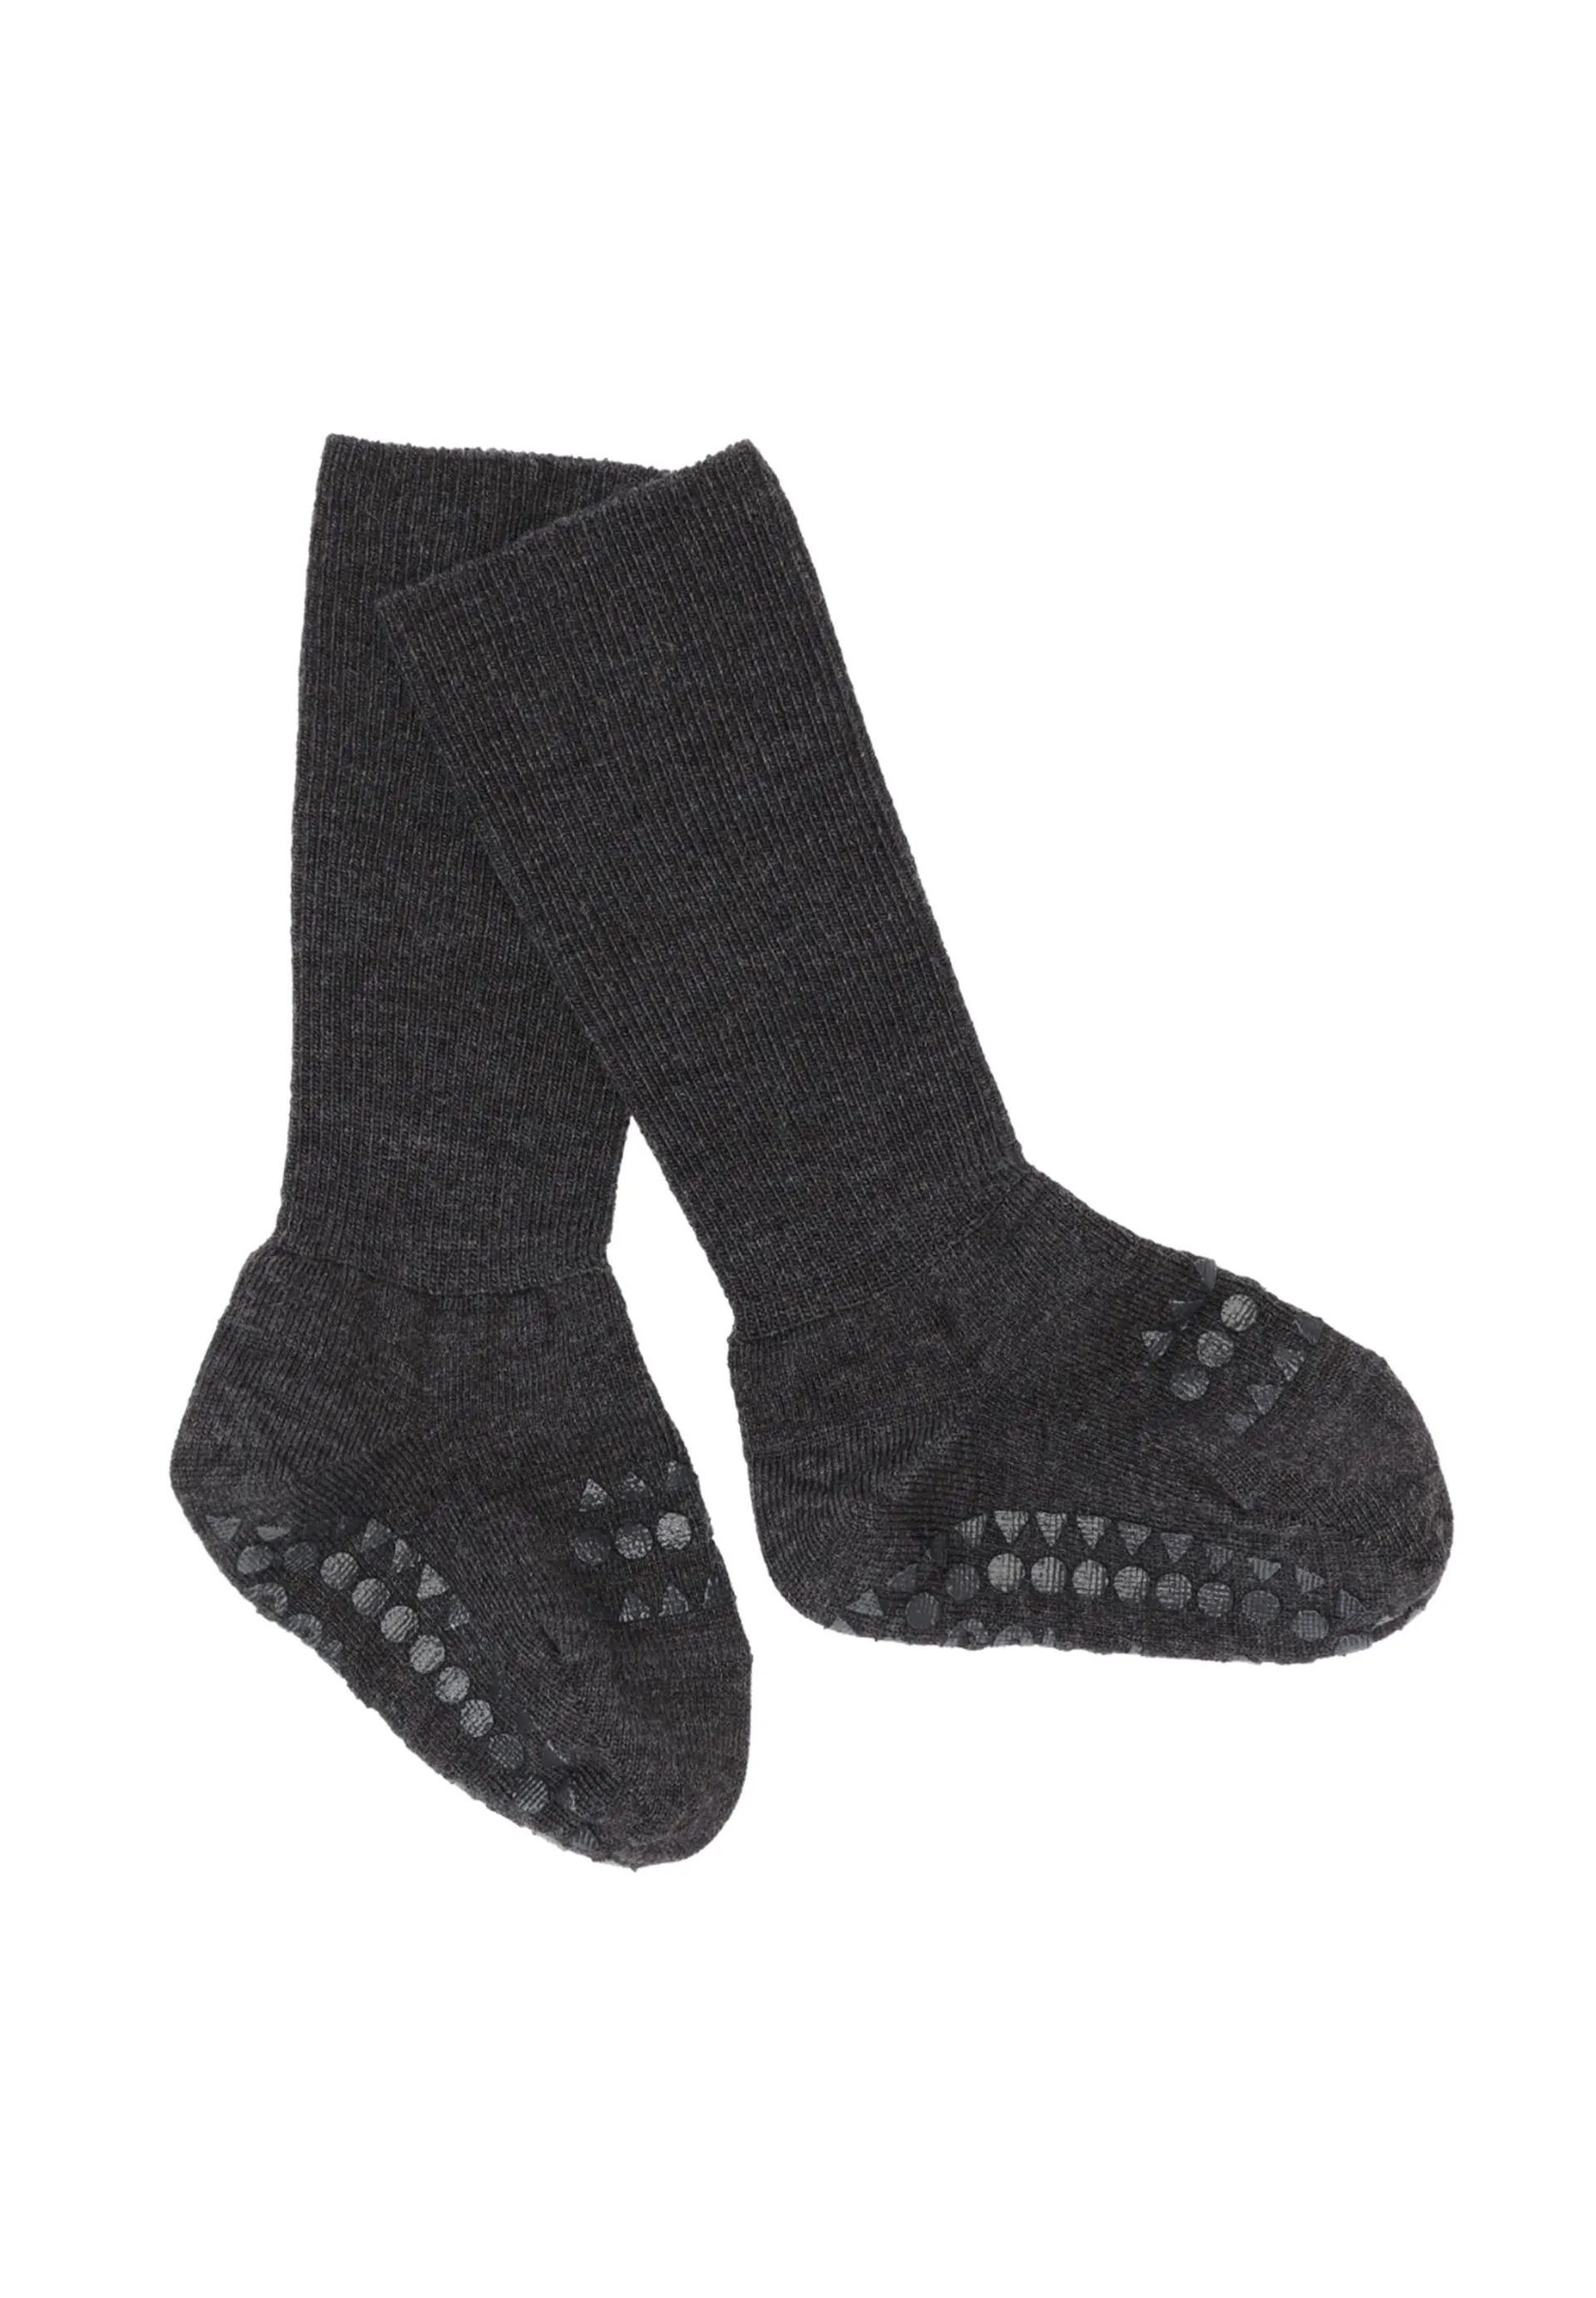 Wool Non-slip baby-socks